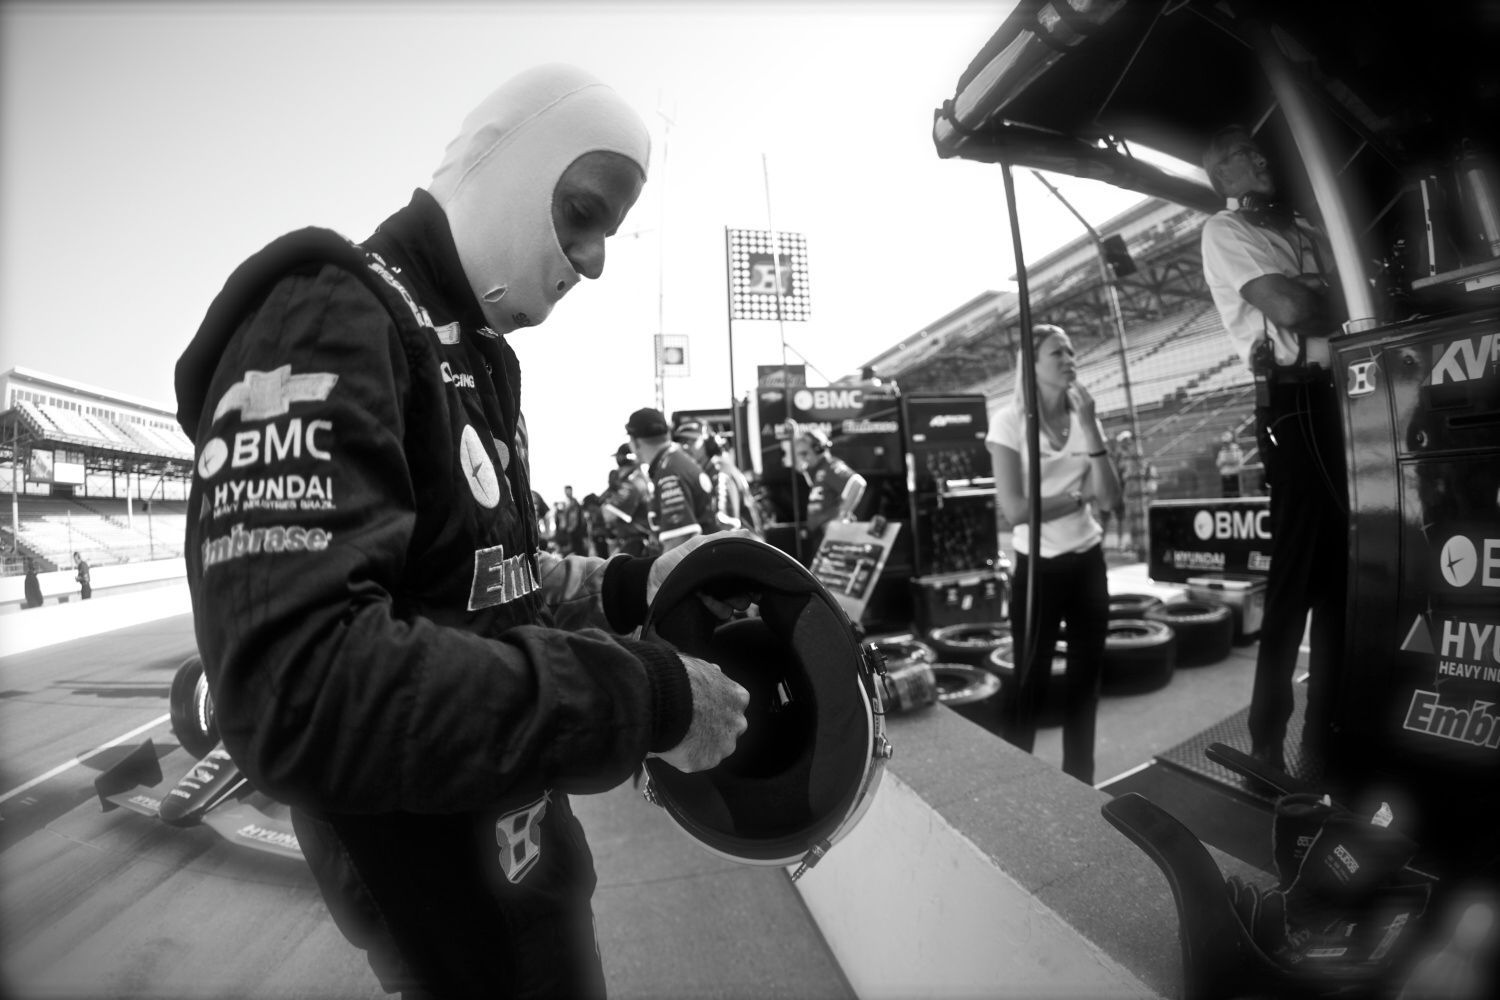 Rubens Barrichello, IndyCar